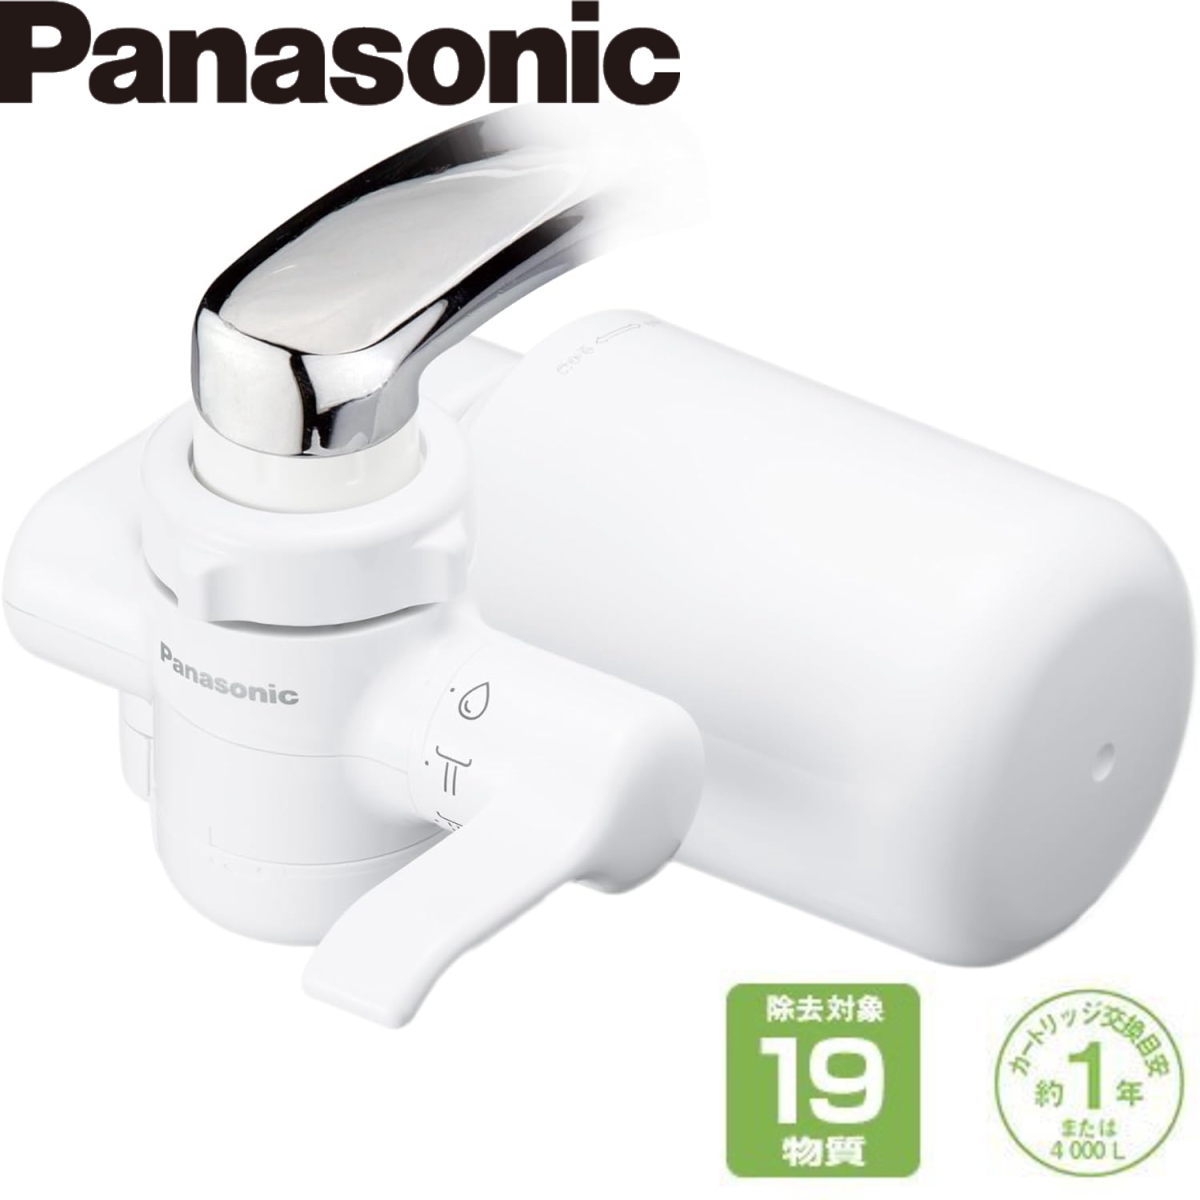 PANASONIC パナソニック 浄水器 TK-CJ24-W ホワイト - 飲食、厨房用